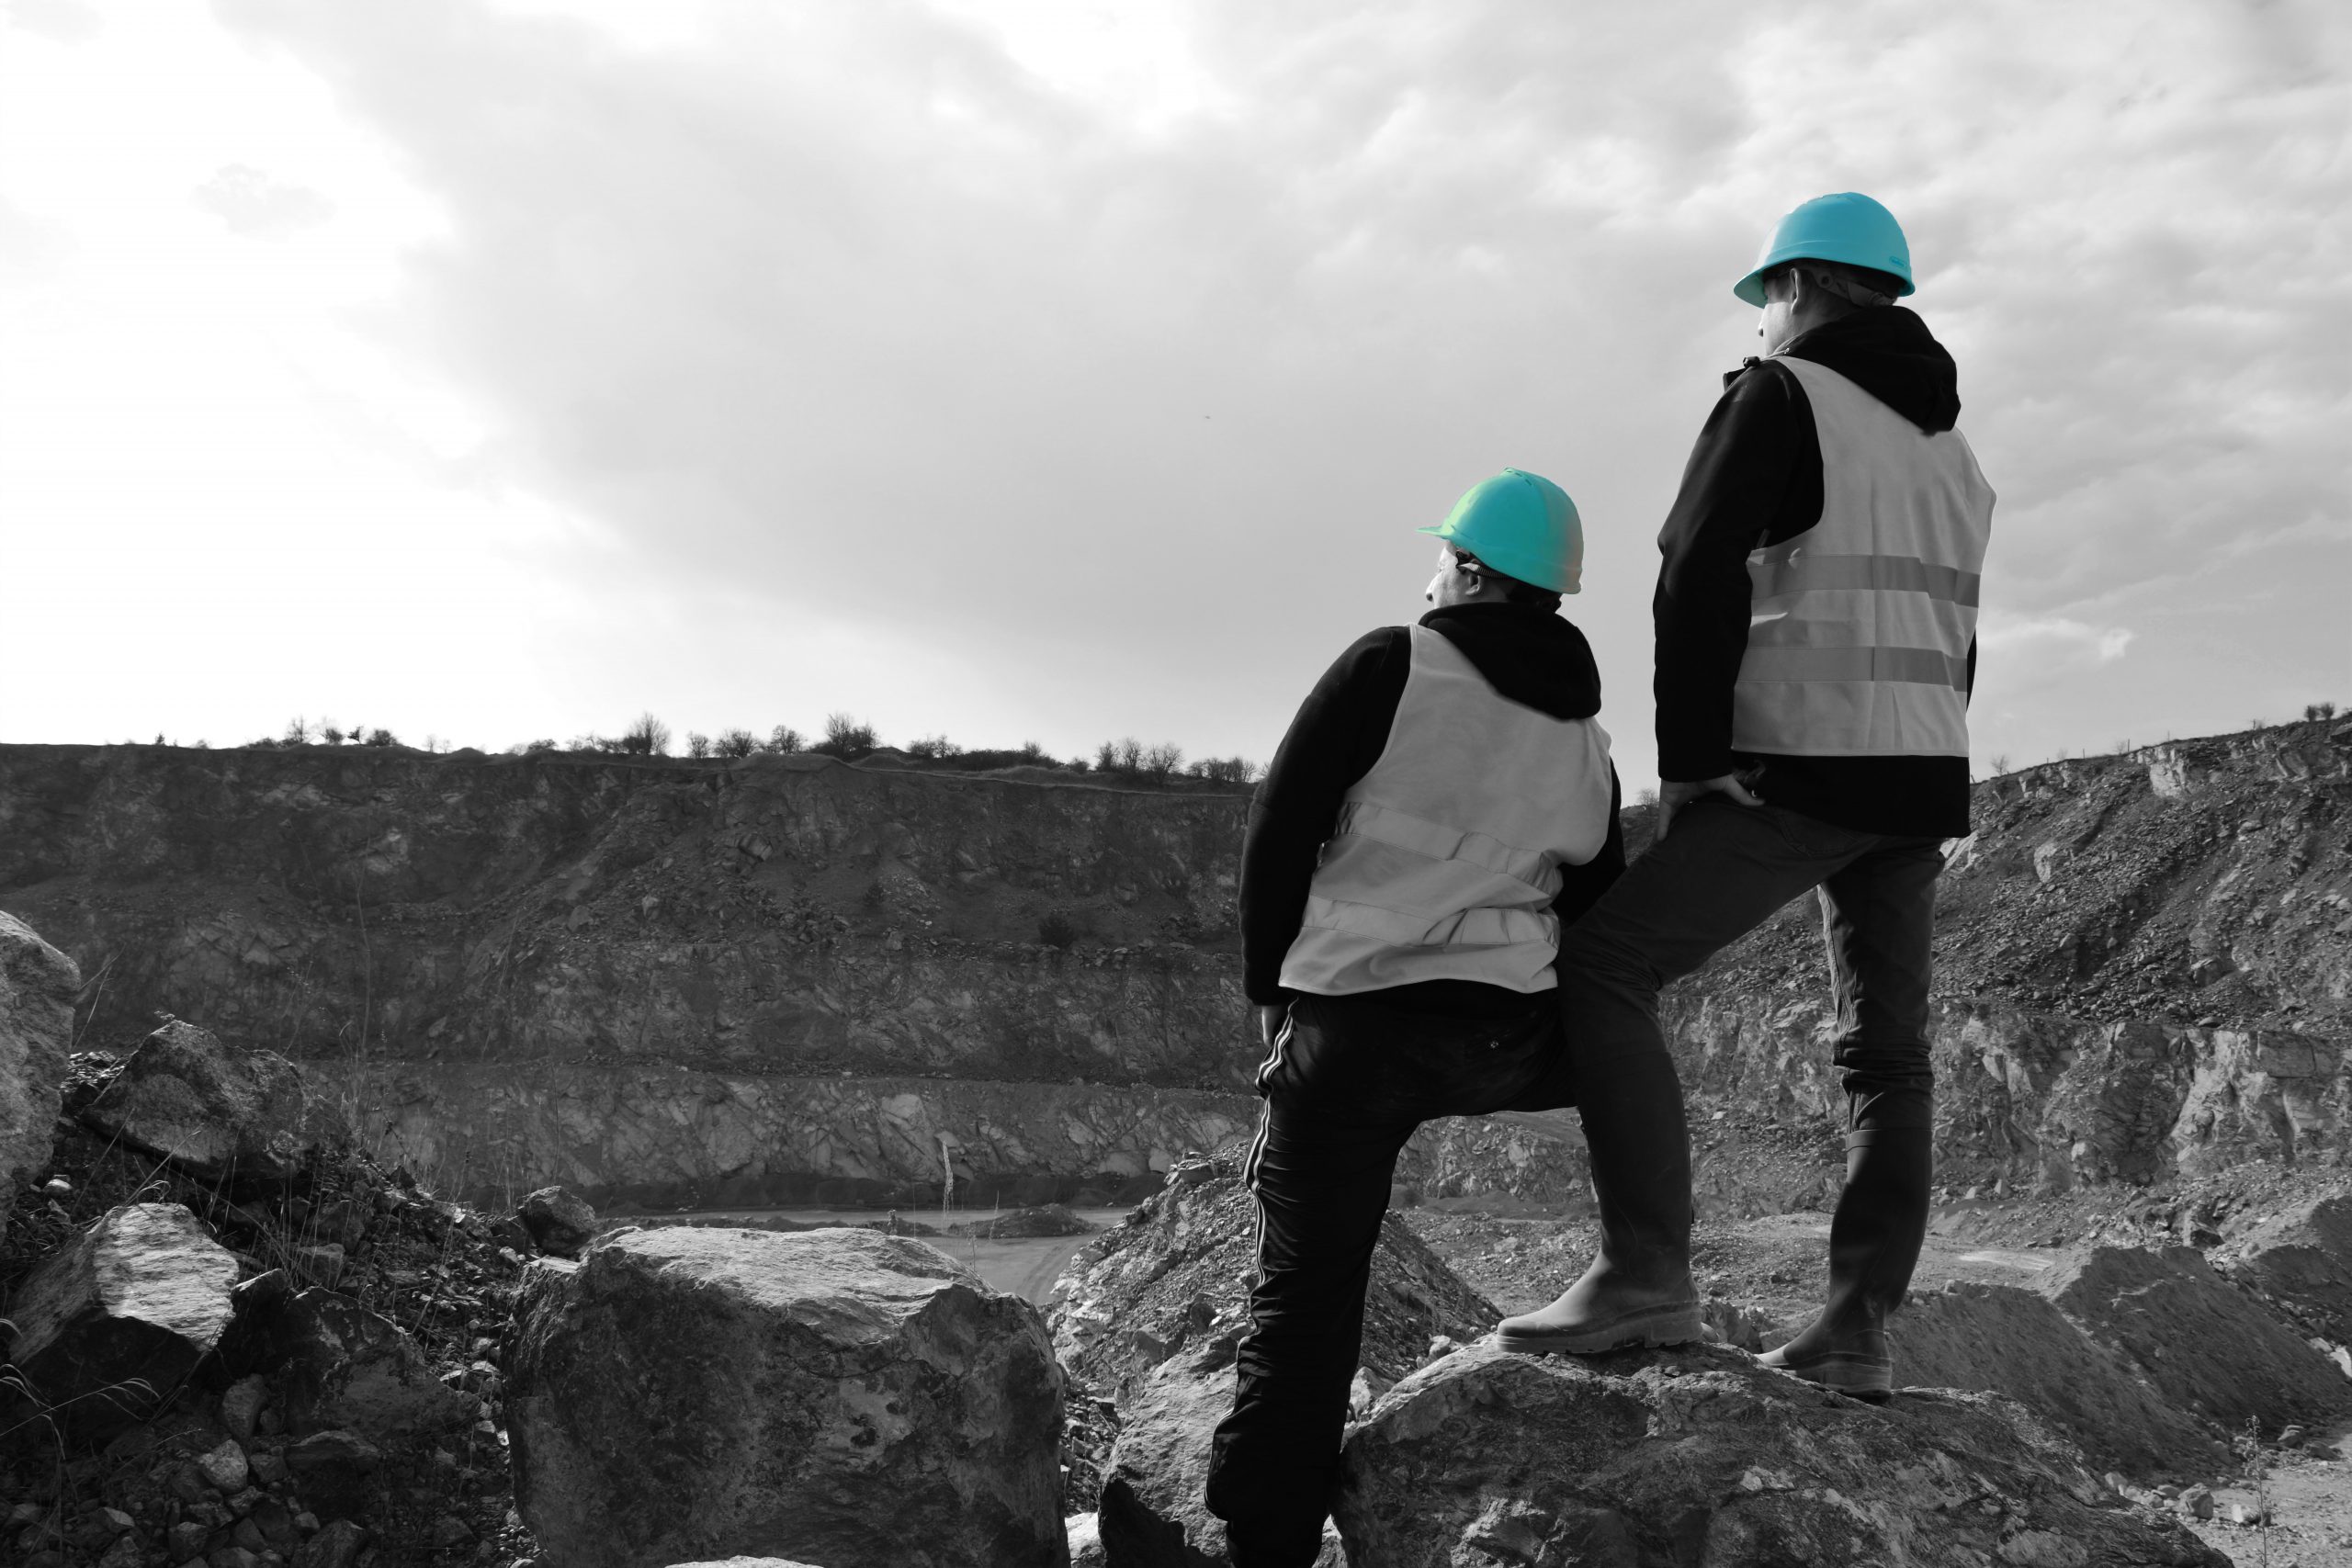 Two men in safety gear standing on rocks